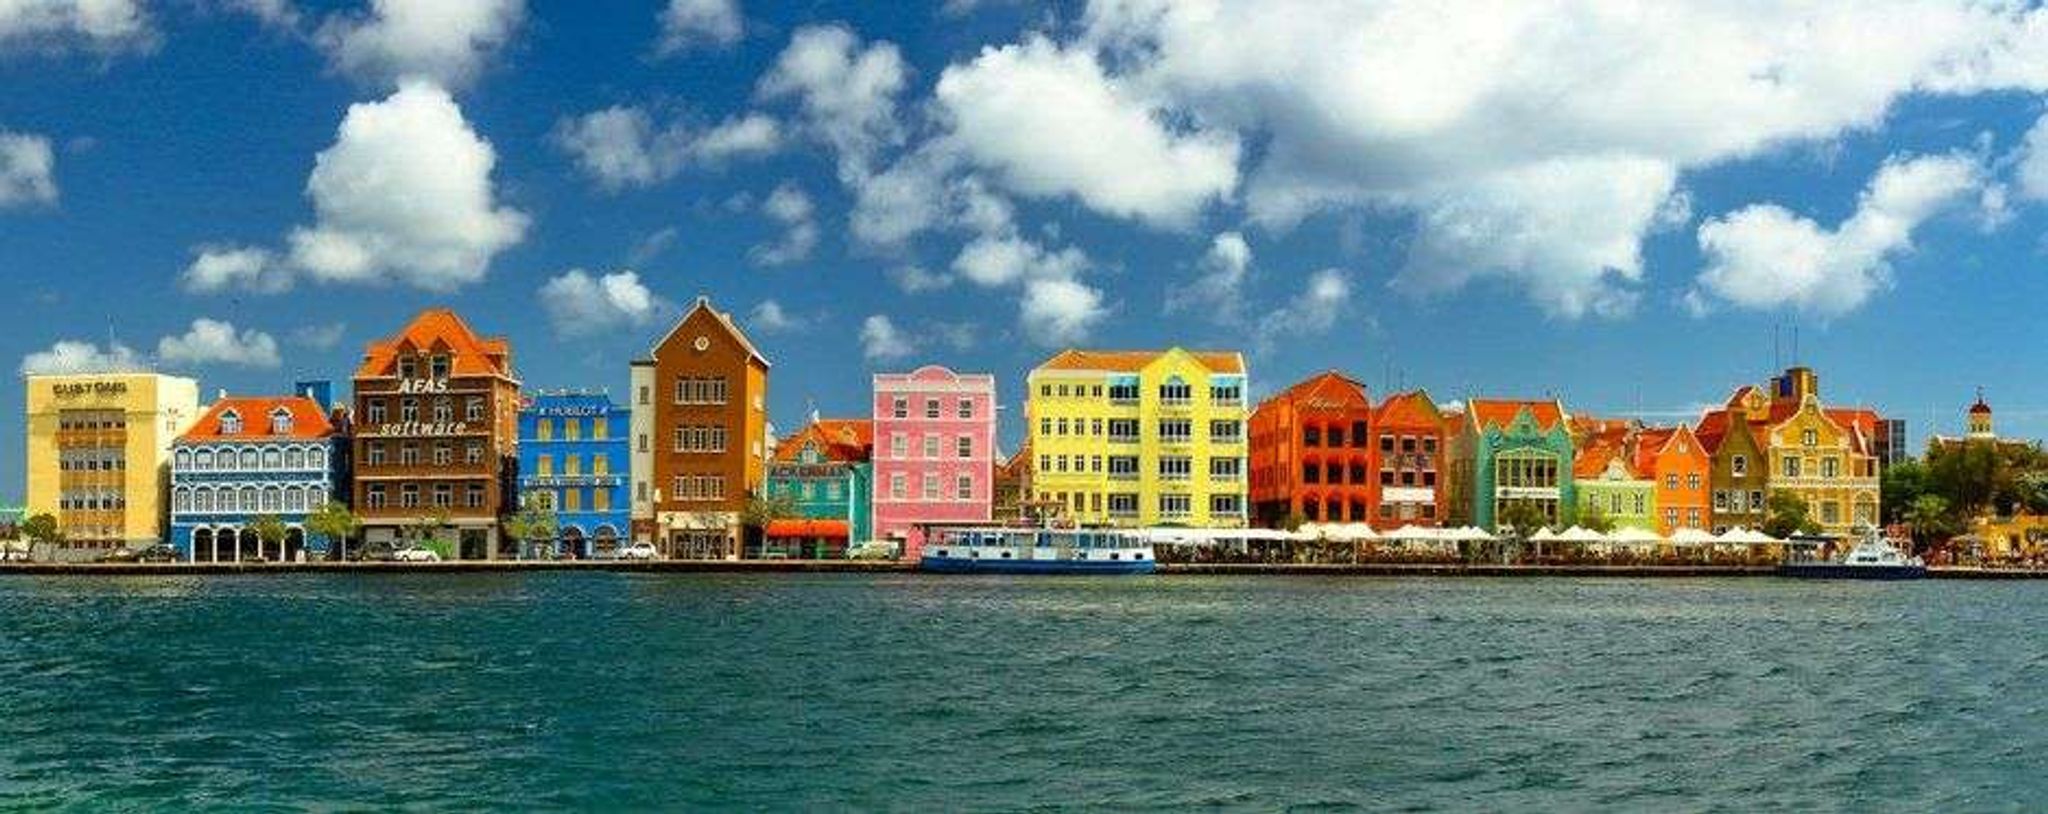 Gekleurde huisjes Curaçao